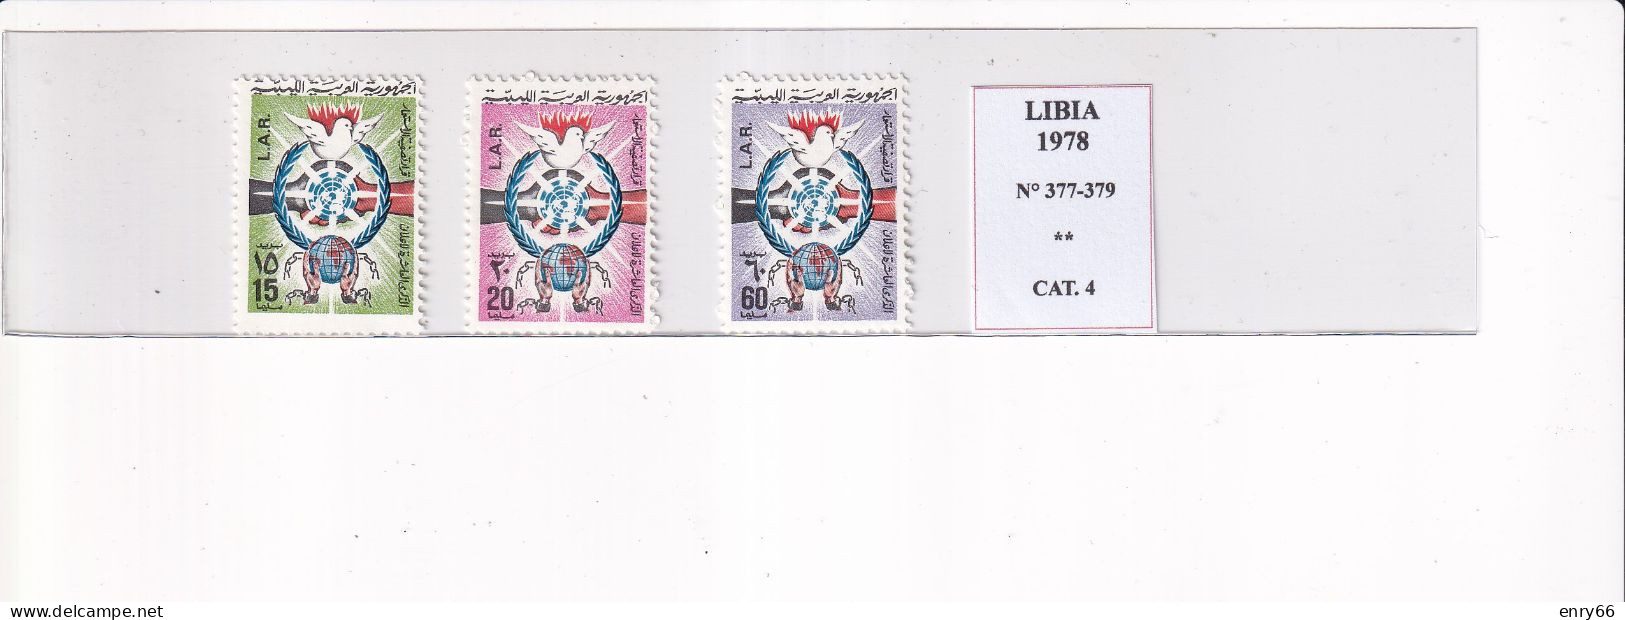 LIBIA 1978 N°377-379 MNH - Libia